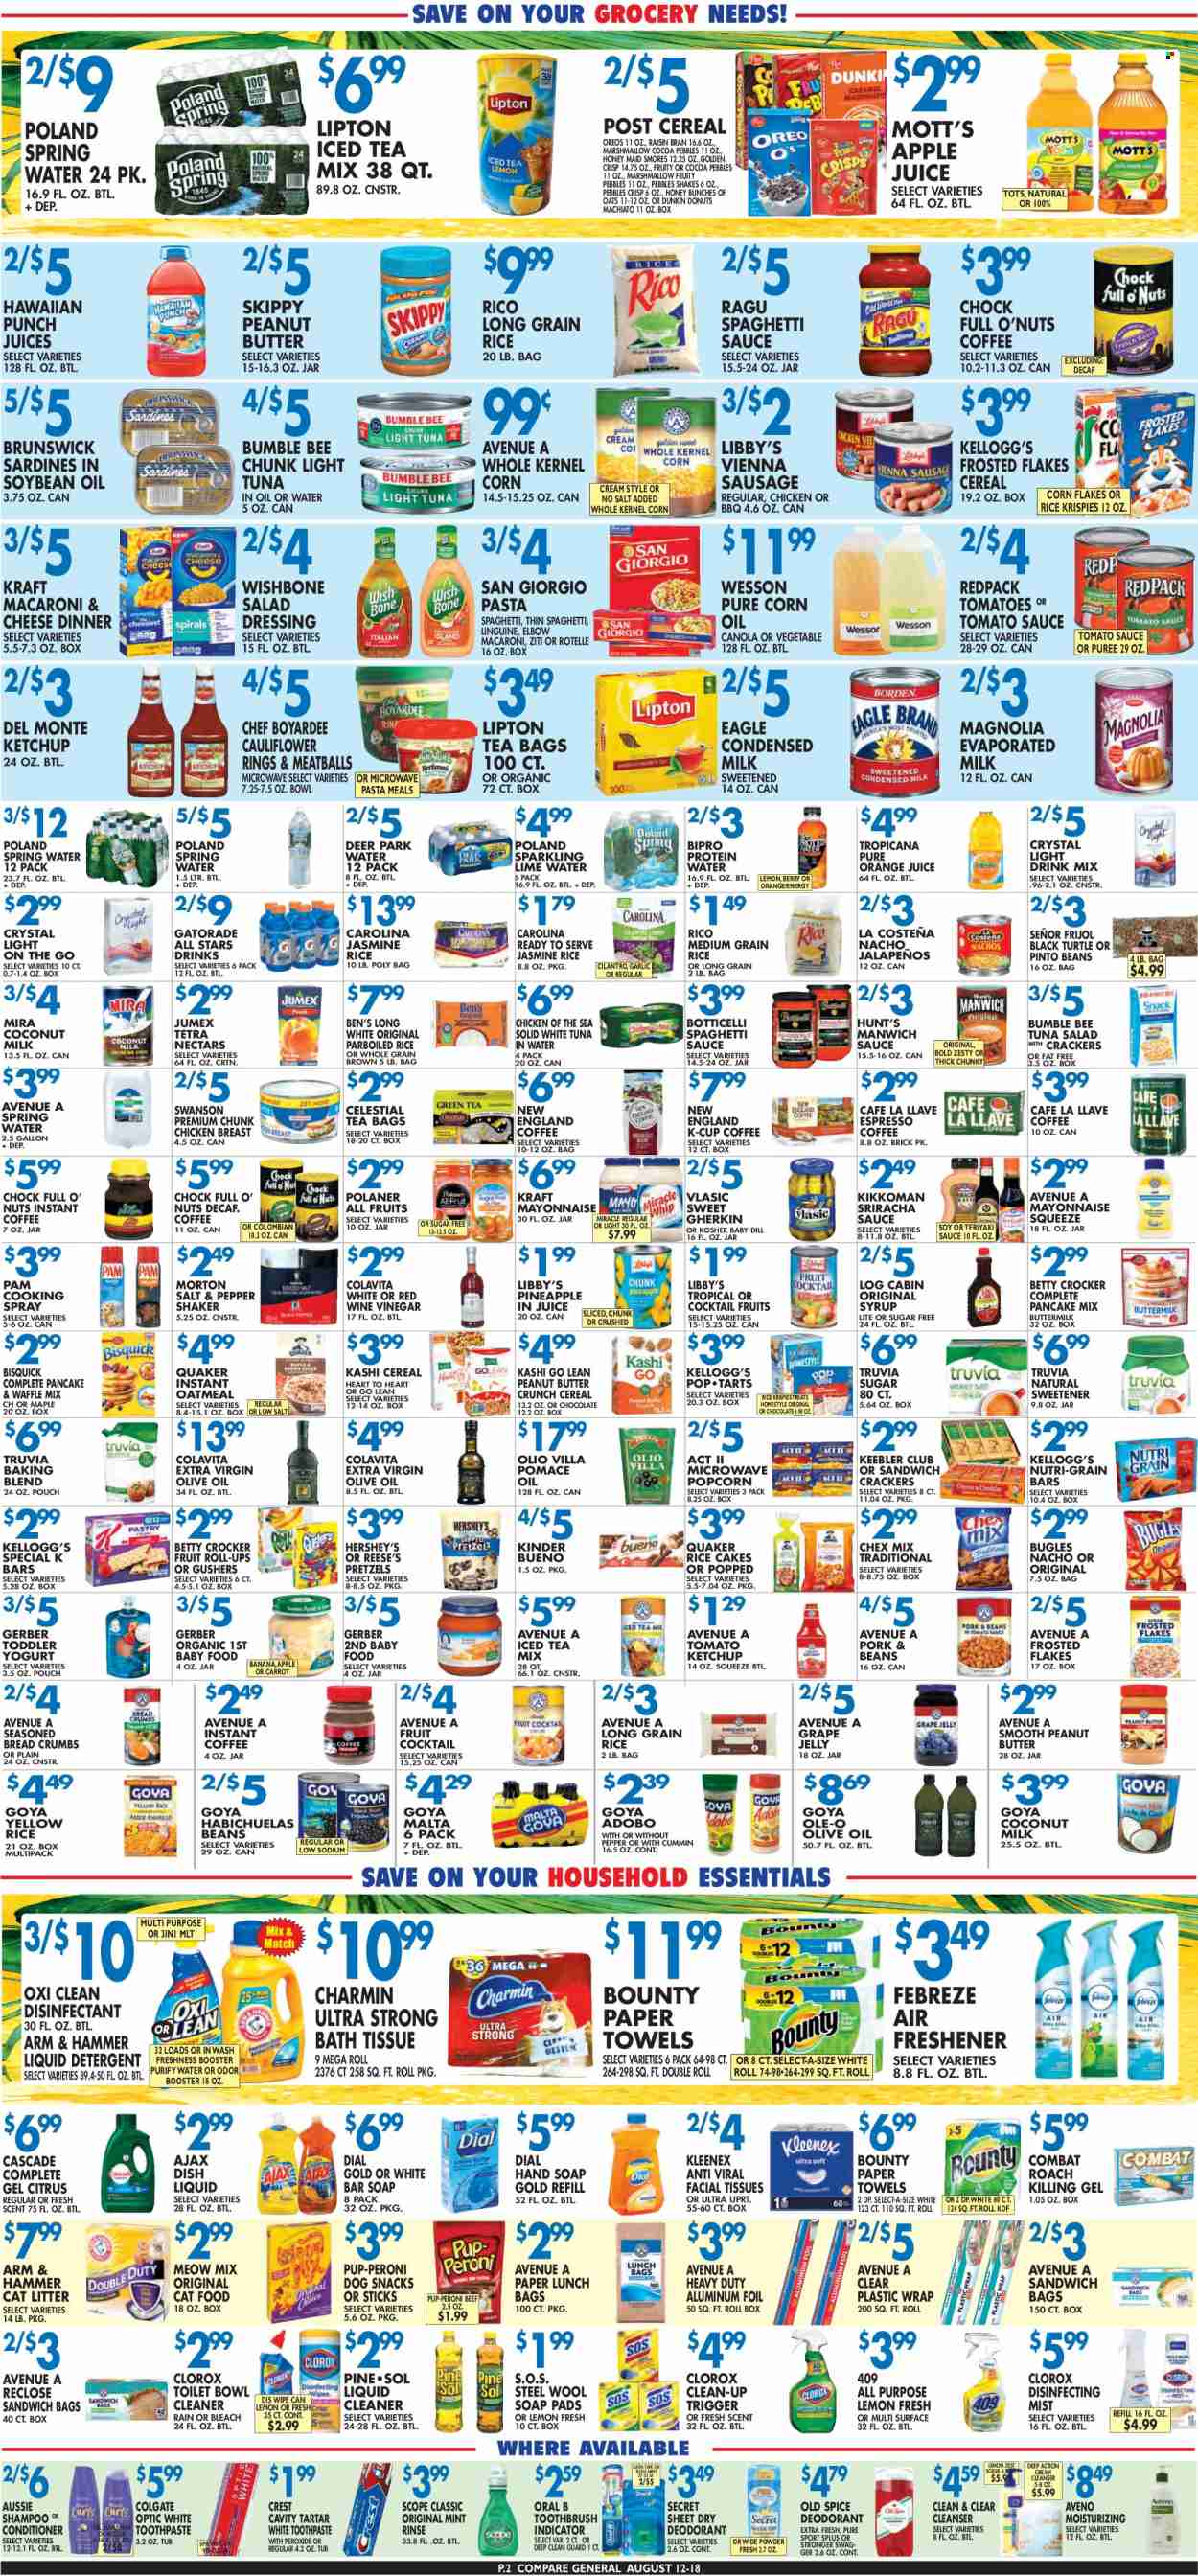 thumbnail - Compare Foods Flyer - 08/12/2022 - 08/18/2022 - Sales products - pretzels, donut, breadcrumbs, garlic, tomatoes, pineapple, Mott's, sardines, macaroni & cheese, spaghetti, meatballs, pasta, Bumble Bee, pancakes, Quaker, Kraft®, spaghetti sauce, sausage, vienna sausage, tuna salad, yoghurt, buttermilk, evaporated milk, condensed milk, shake, Reese's, Hershey's, marshmallows, chocolate, snack, Bounty, jelly, crackers, Kellogg's, Kinder Bueno, Keebler, Gerber, popcorn, Chex Mix, ARM & HAMMER, Bisquick, oatmeal, sweetener, coconut milk, tomato sauce, tuna in water, pinto beans, light tuna, Chicken of the Sea, Goya, Manwich, Chef Boyardee, Del Monte, cereals, corn flakes, Rice Krispies, Frosted Flakes, Fruity Pebbles, Raisin Bran, Honey Maid, Nutri-Grain, jasmine rice, parboiled rice, long grain rice, medium grain rice, cilantro, dill, spice, adobo sauce, salad dressing, sriracha, ketchup, Kikkoman, dressing, teriyaki sauce, ragu, cooking spray, corn oil, extra virgin olive oil, soya oil, vinegar, wine vinegar, olive oil, grape jelly, syrup, apple juice, orange juice, juice, Lipton, Gatorade, spring water, tea bags, instant coffee, coffee capsules, K-Cups, chicken breasts, cat litter. Page 2.